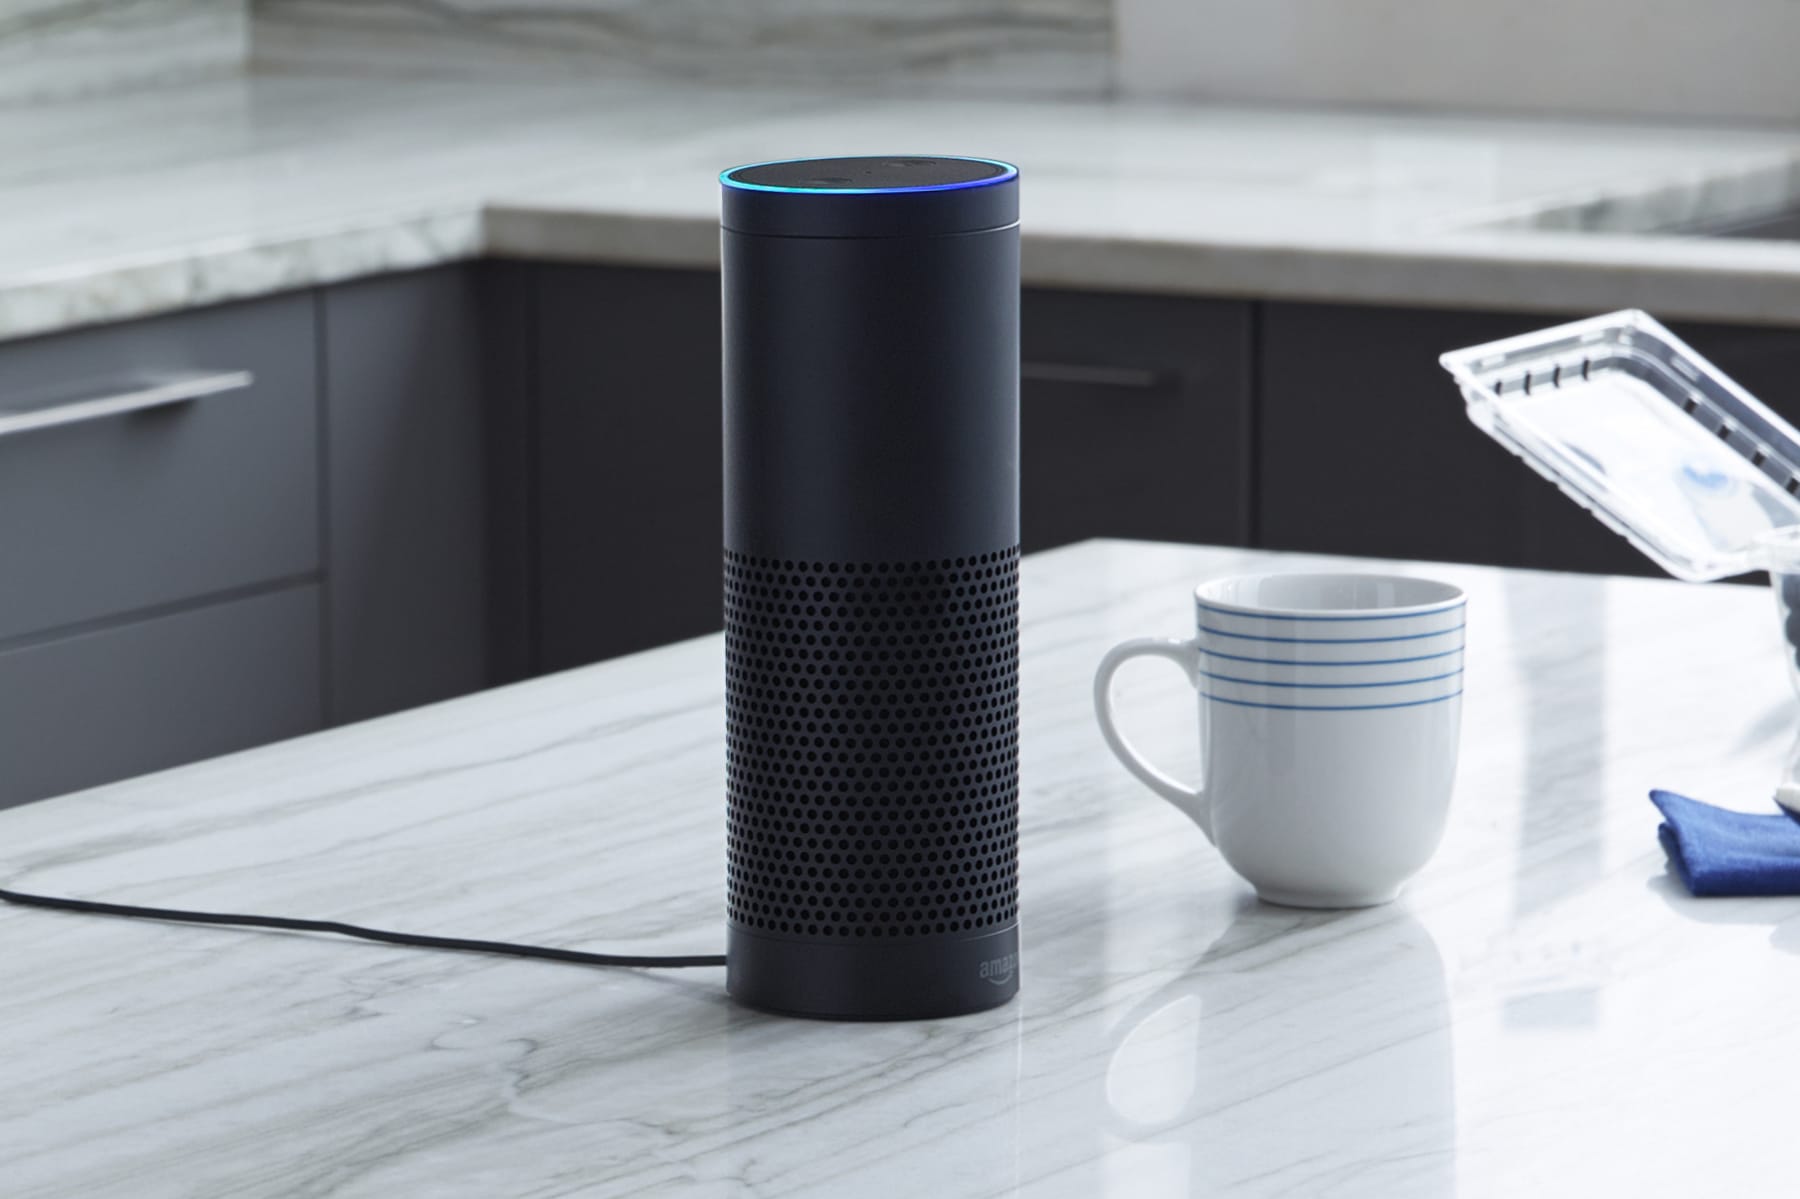 Amazon Echo Alexa virtual assistant